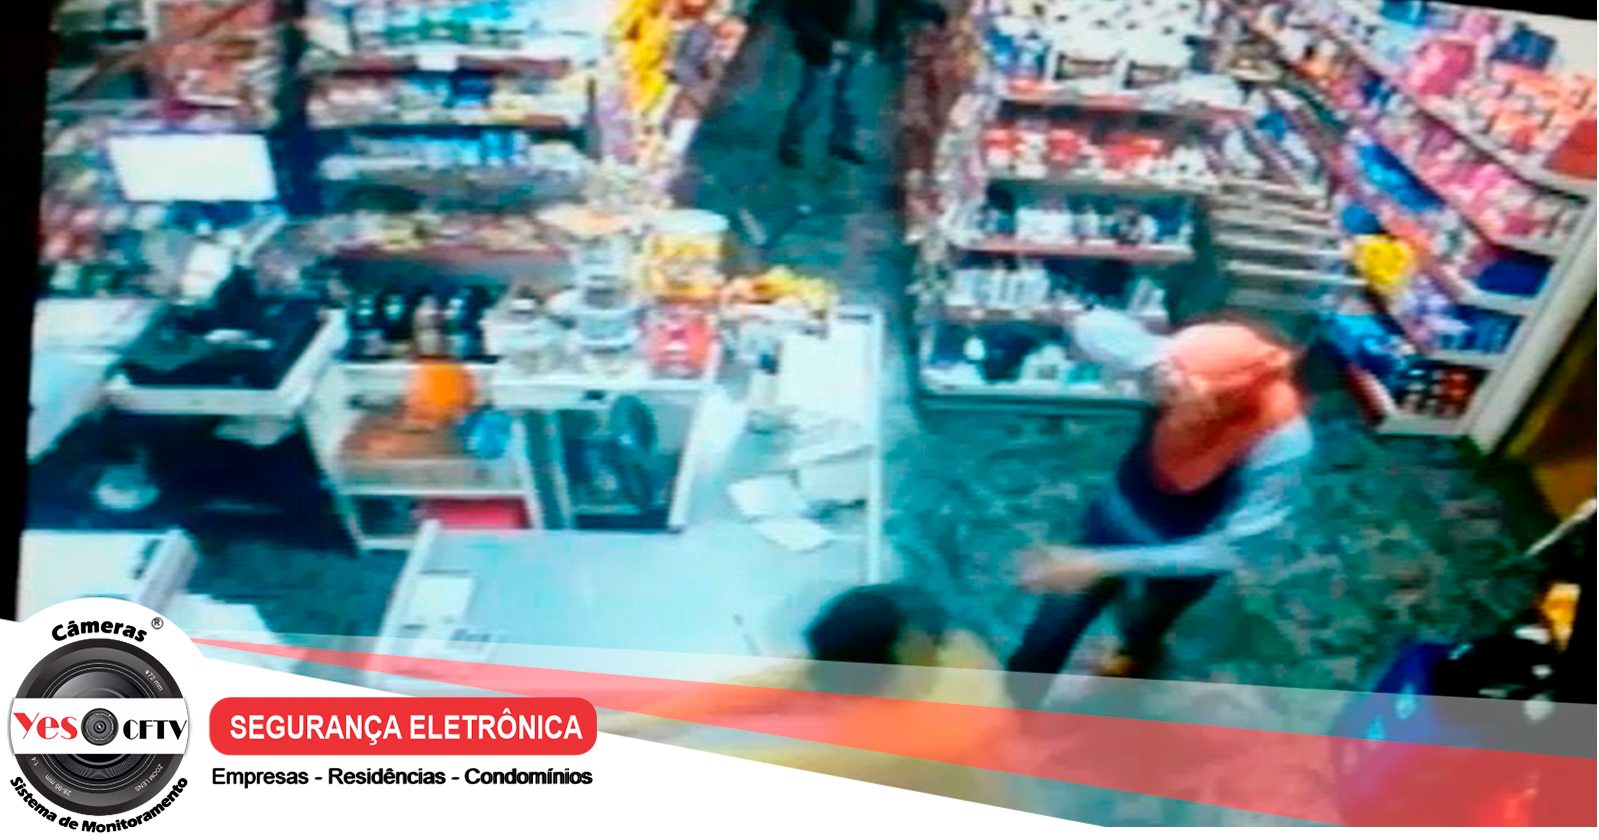 Onda de assaltos à supermercados aterroriza BH